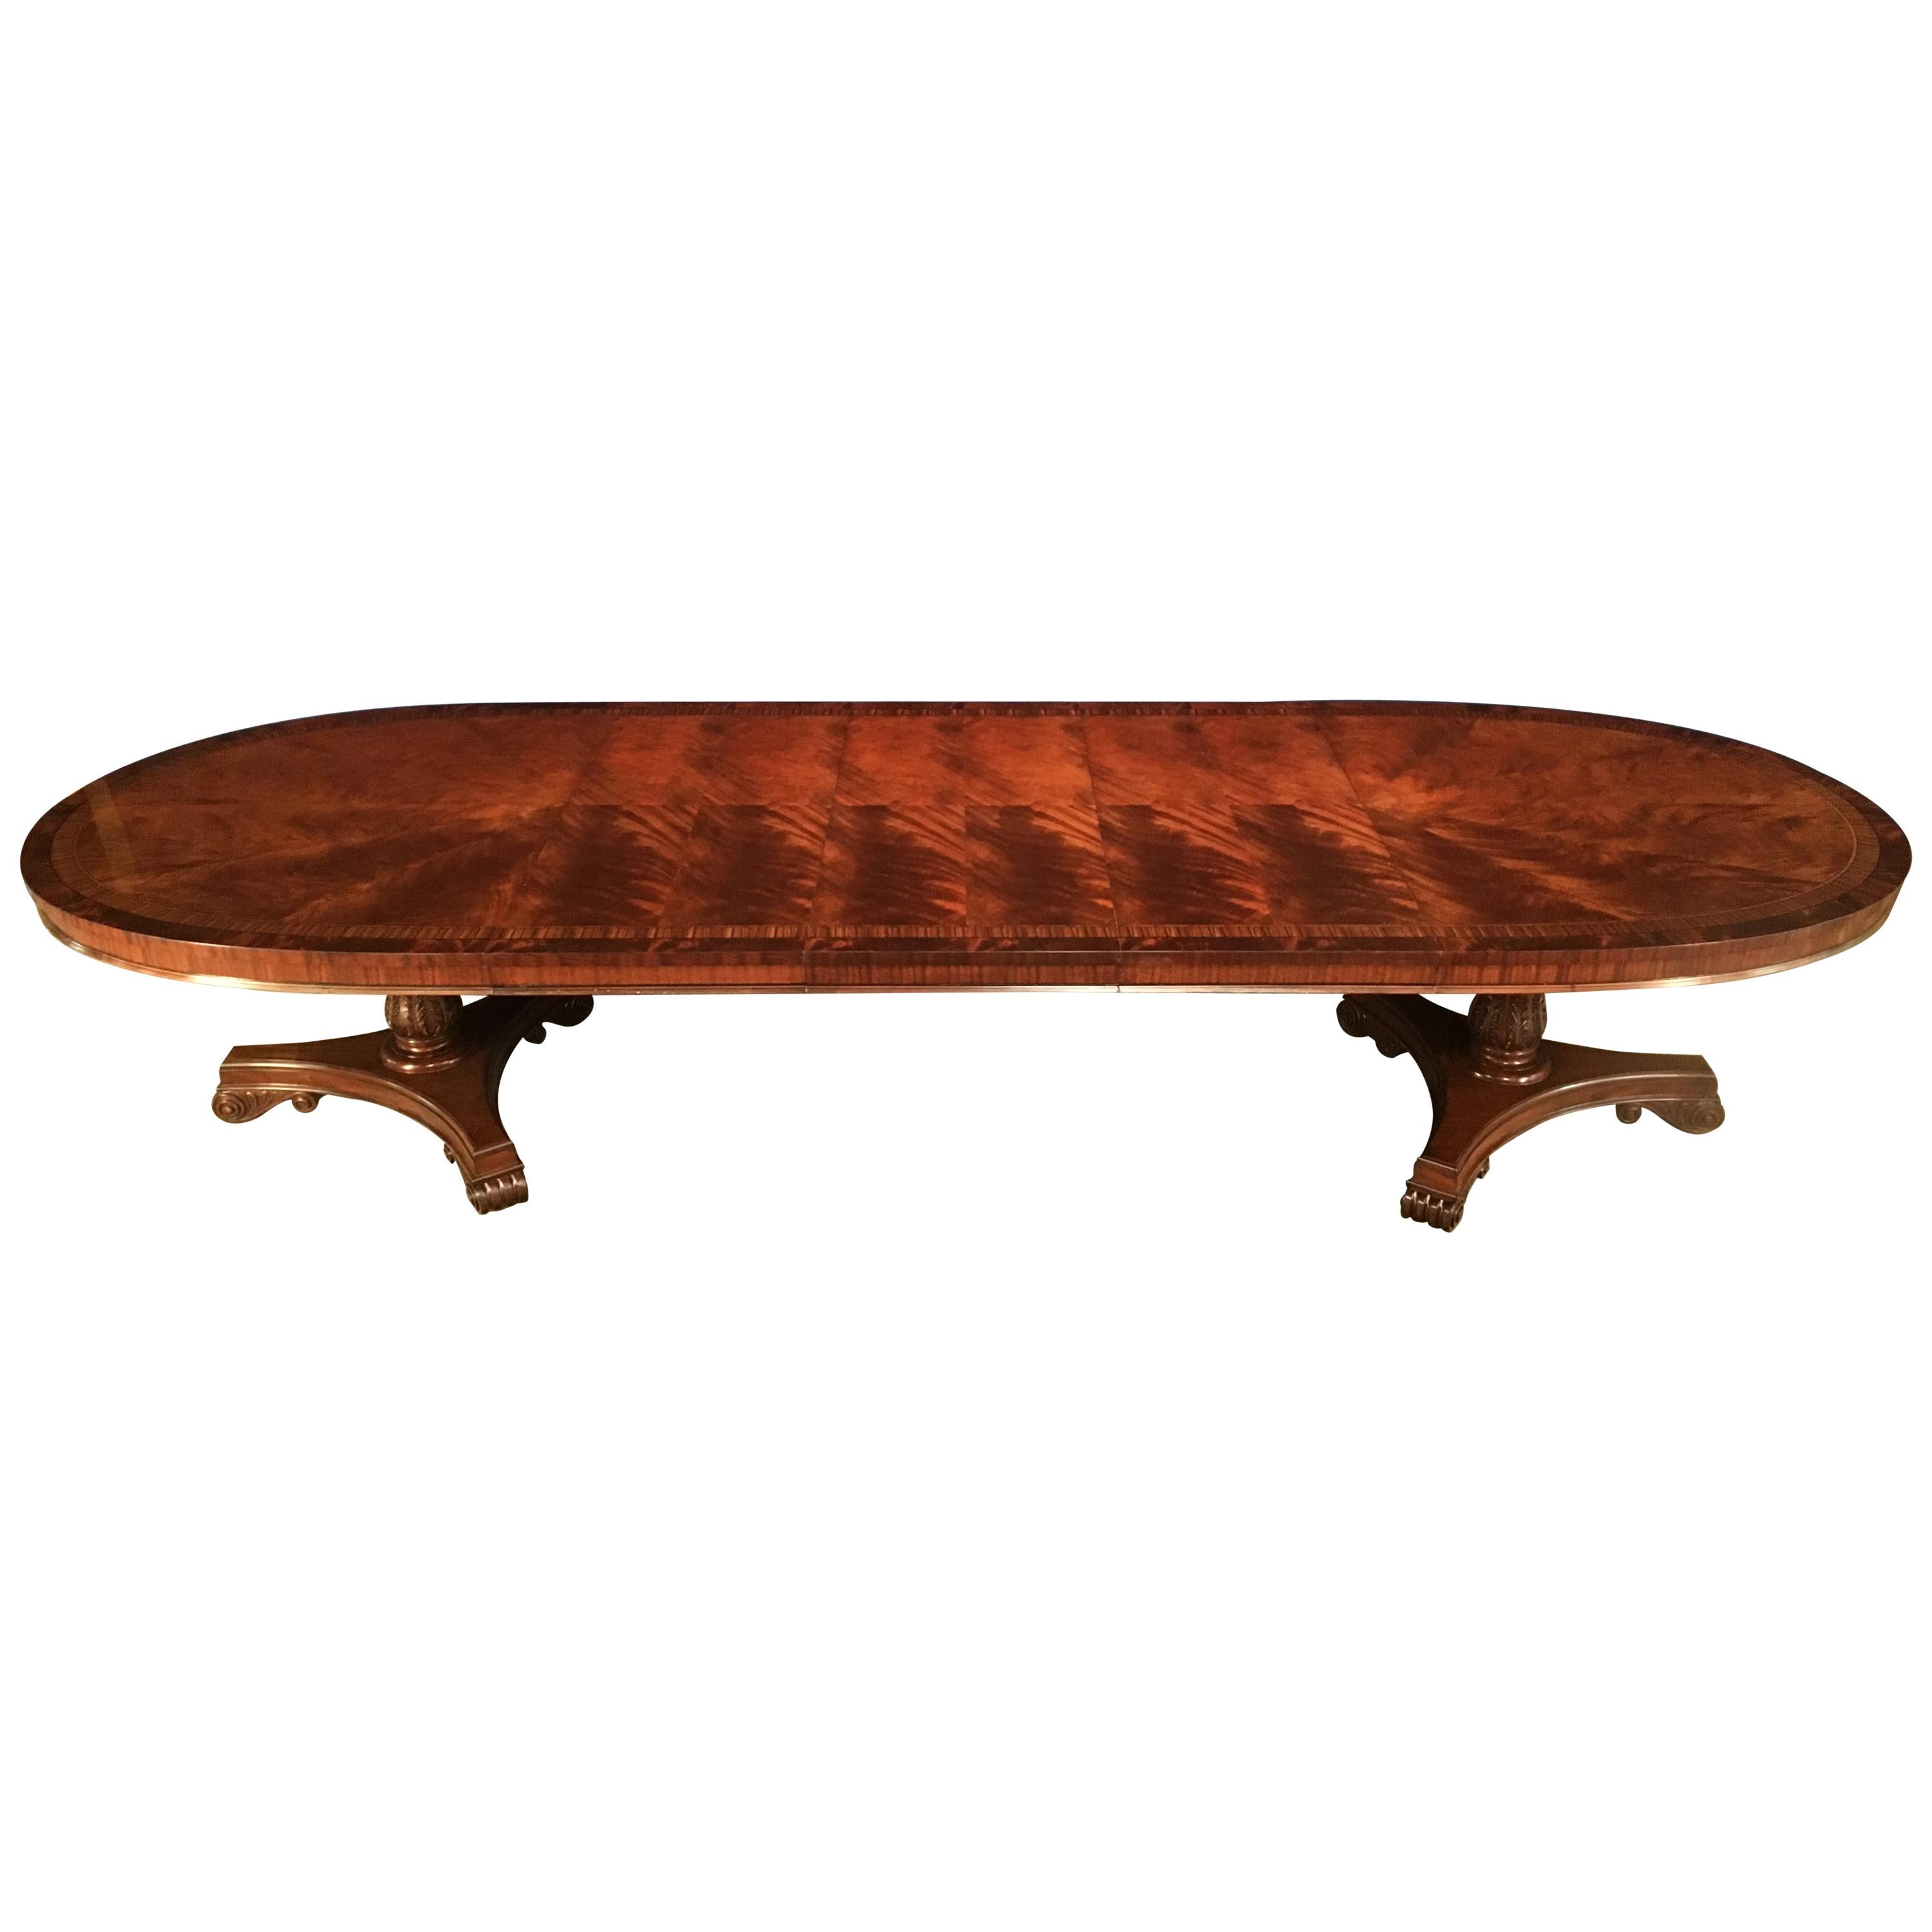 Custom Oval Regency Style Mahogany Dining Table by Leighton Hall